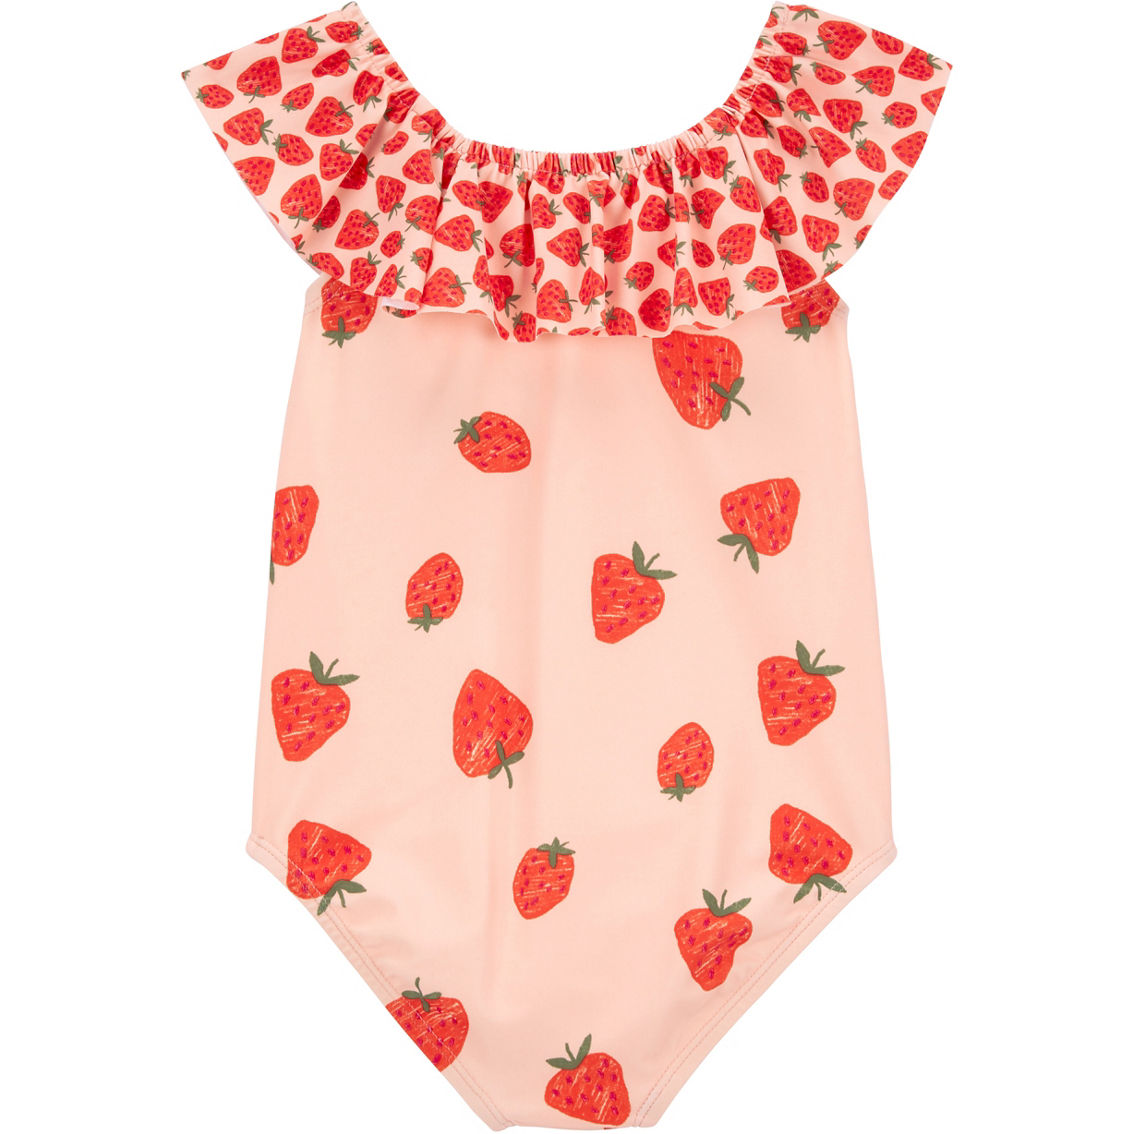 Carter's Toddler Girls Strawberry Ruffled Swimsuit - Image 2 of 2